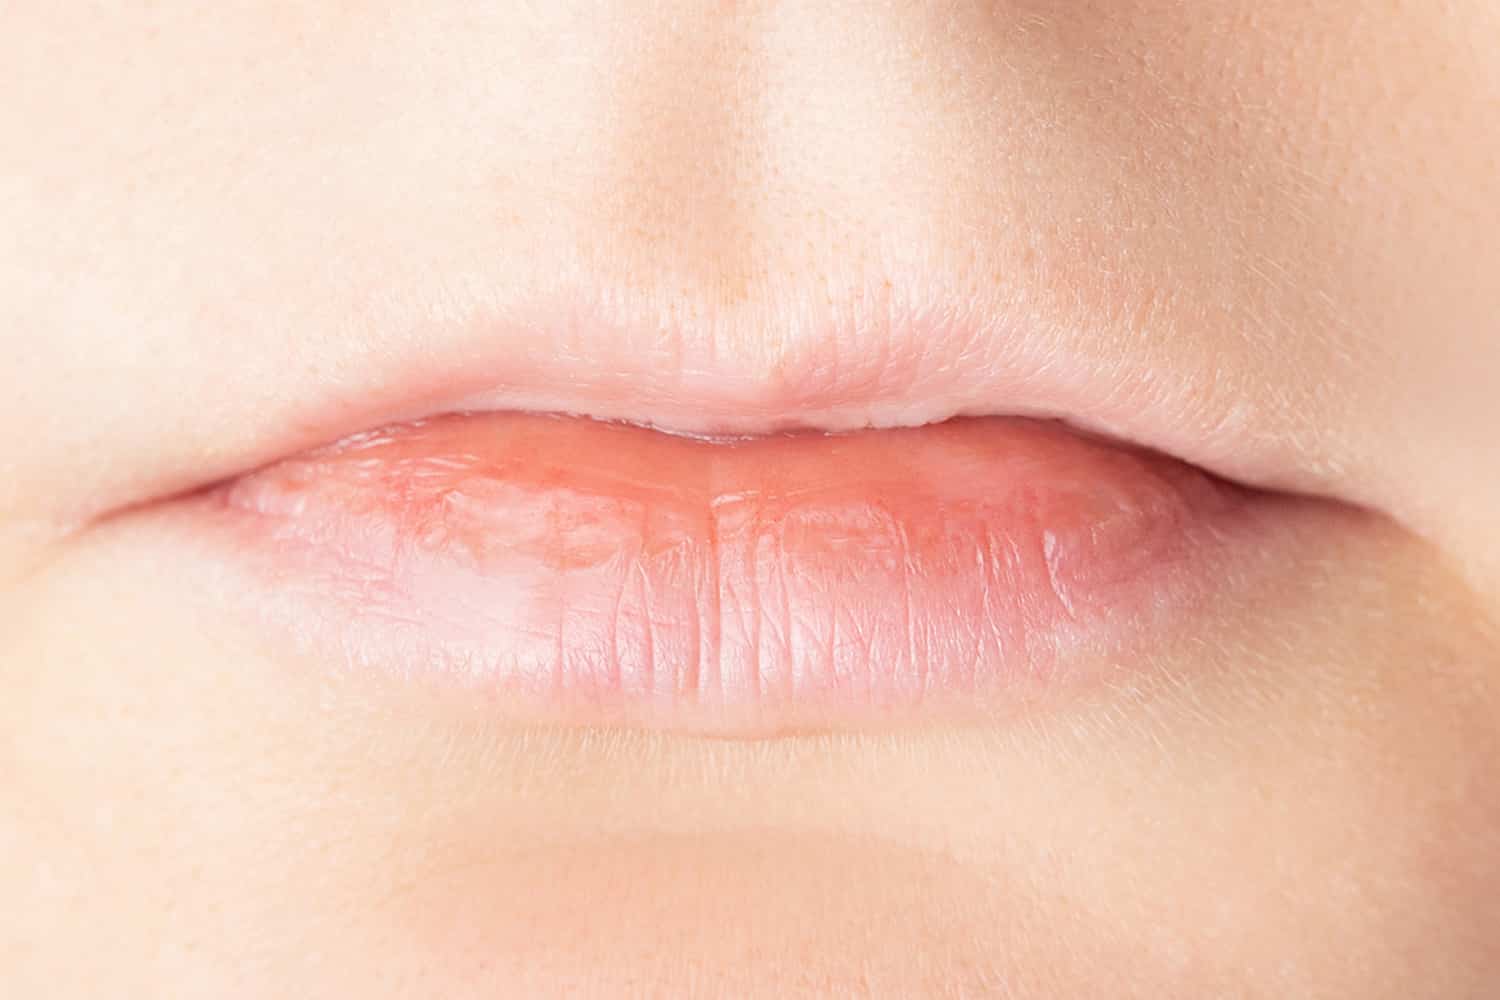 A close up of a lip prior to Juvederm procedure